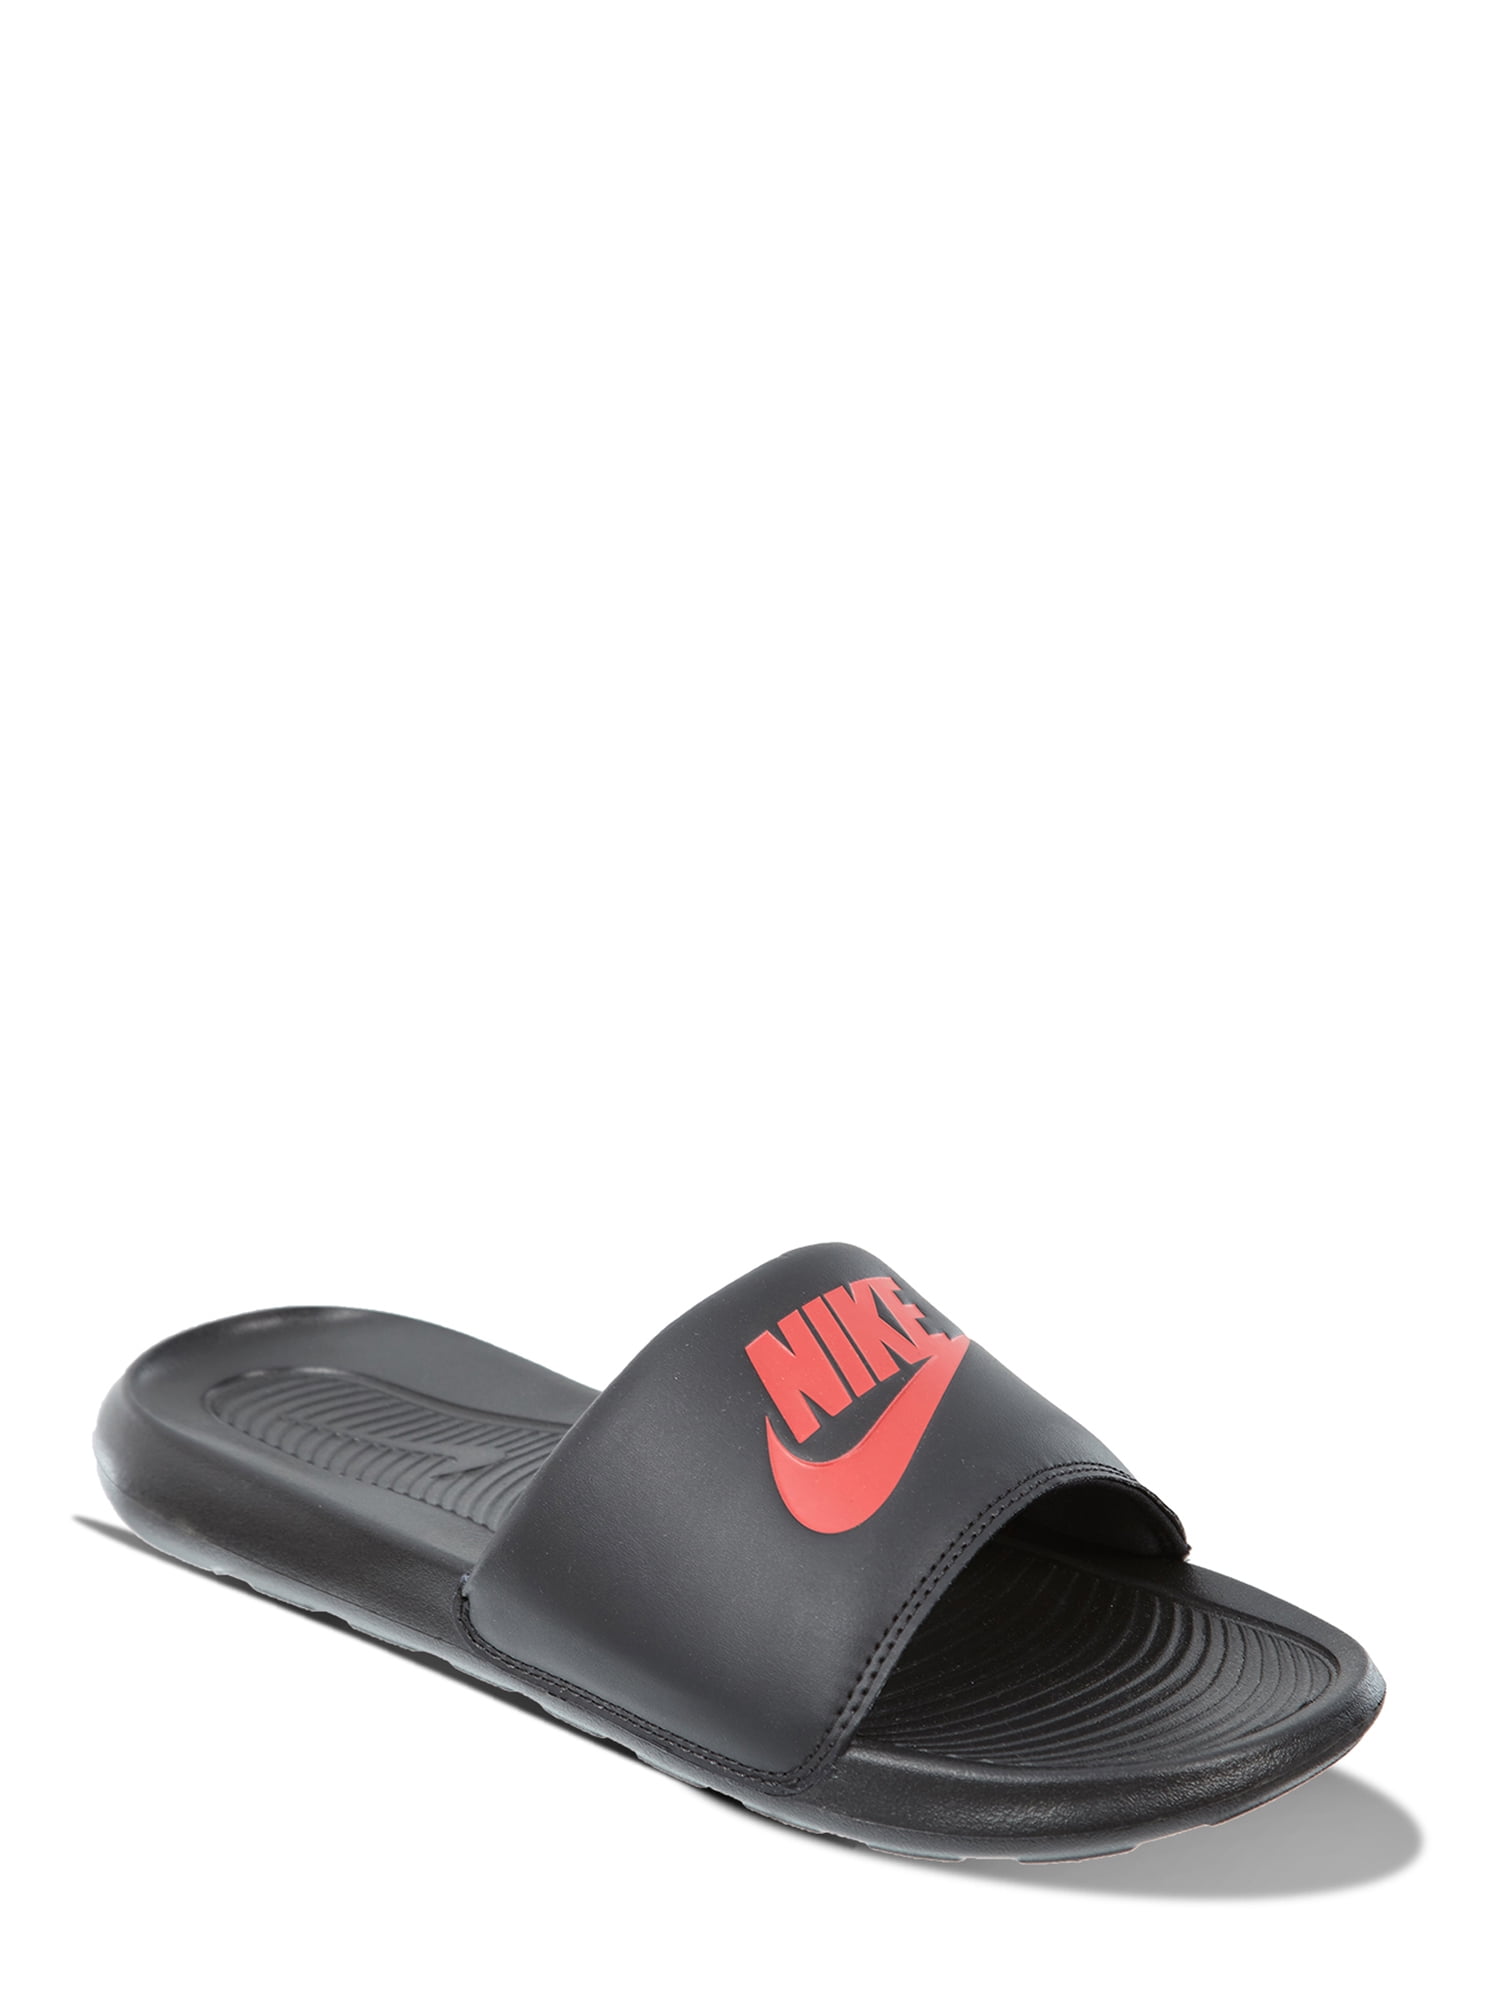 Nike Men's Victori Slide Sandal - Walmart.com